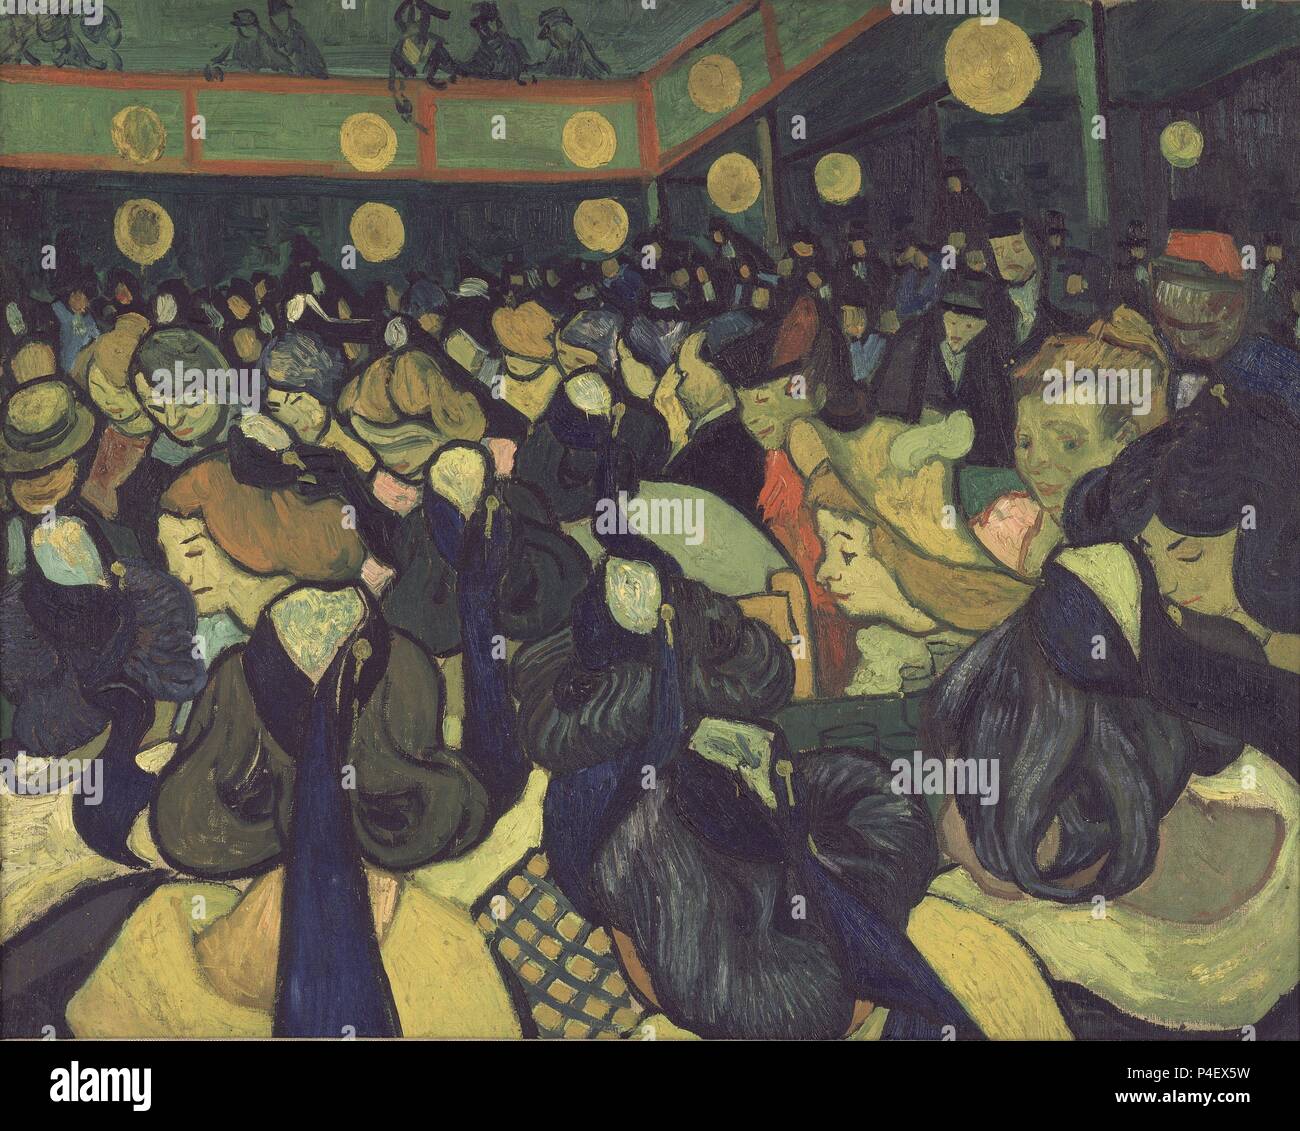 Die Dance Hall in Arles - 1888 - 65 x 81 cm - Öl auf Leinwand. Autor: Vincent van Gogh (1853-1890). Lage: Musee D'Orsay, Frankreich. Auch als: EL SALON DE BAILE DE ARLES bekannt. Stockfoto